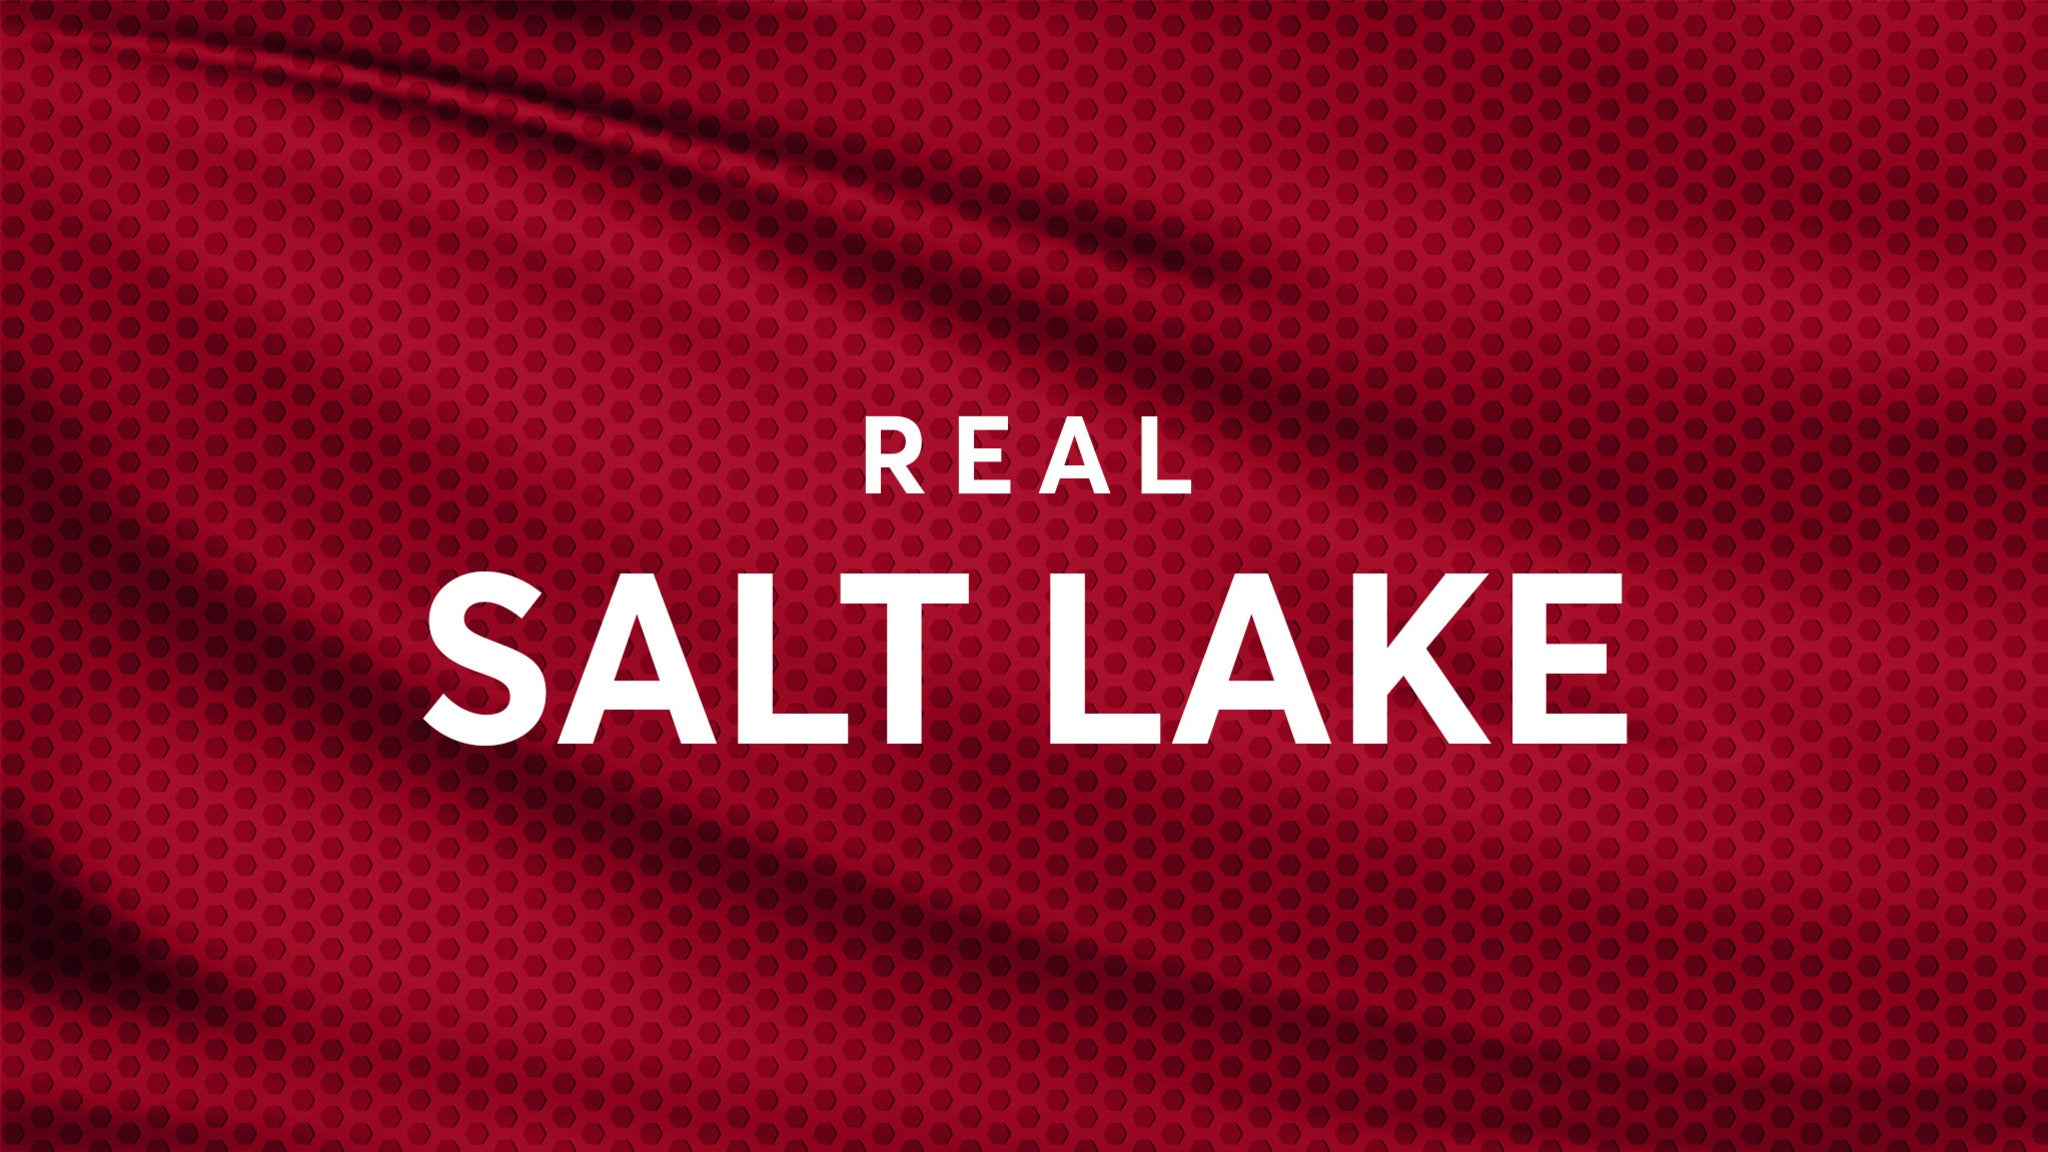 Mobile Mini Sun Cup - Phoenix Rising FC vs Real Salt Lake in Scottsdale promo photo for Exclusive presale offer code